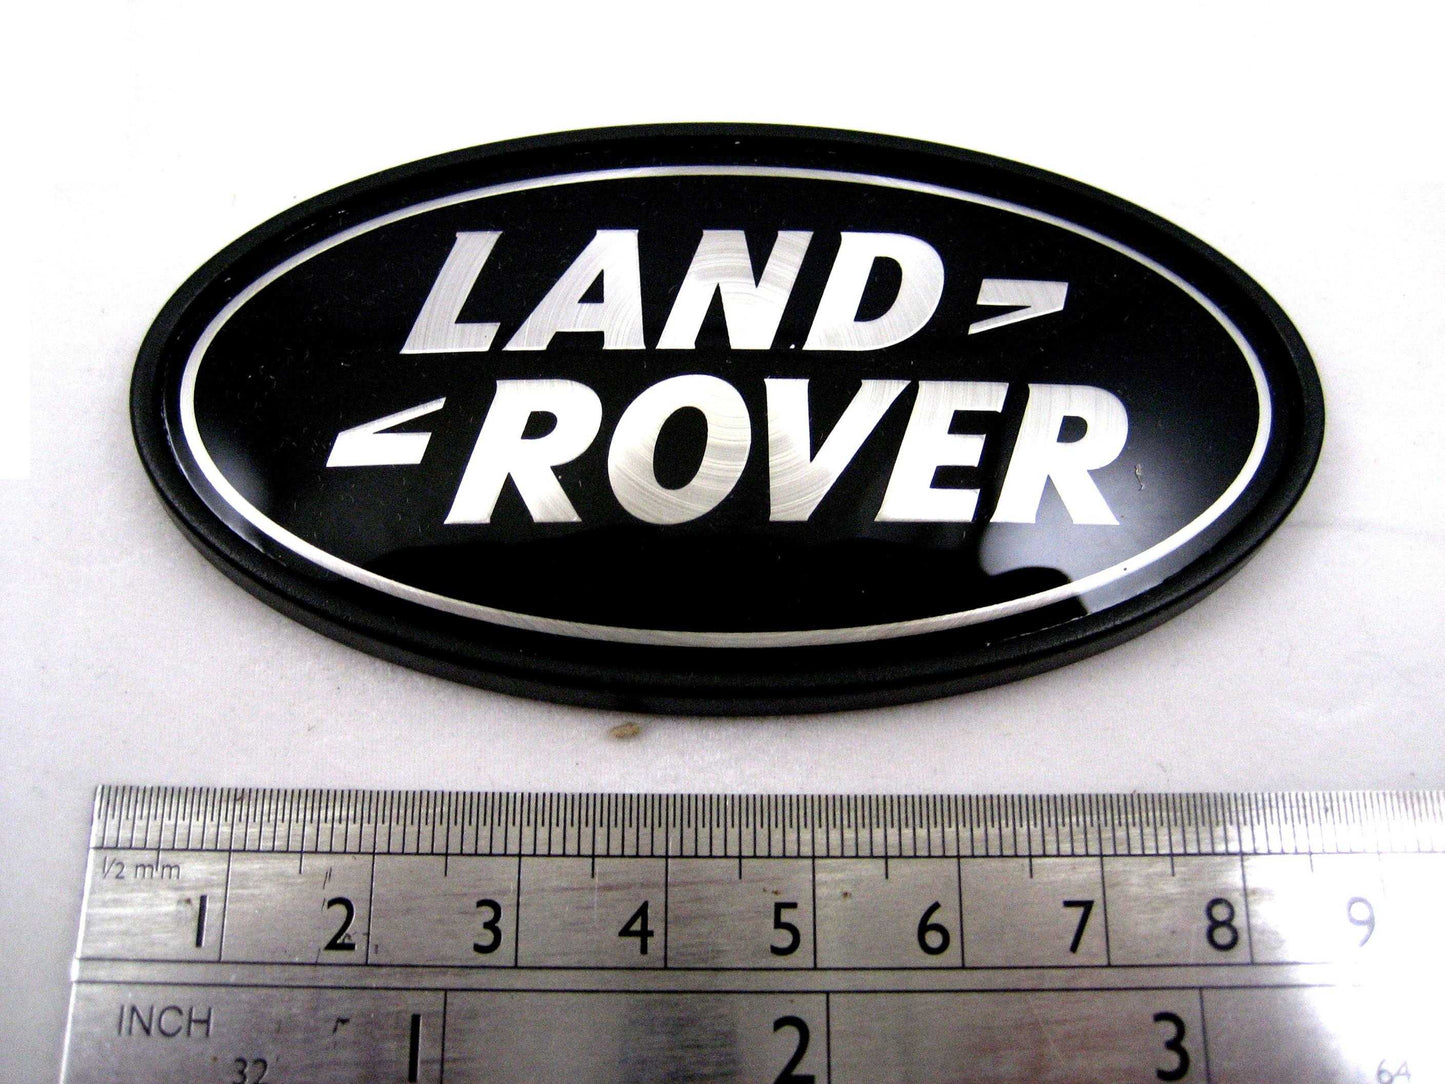 Genuine Rear Tailgate Badge - Black & Silver - plus Template for Range Rover L405